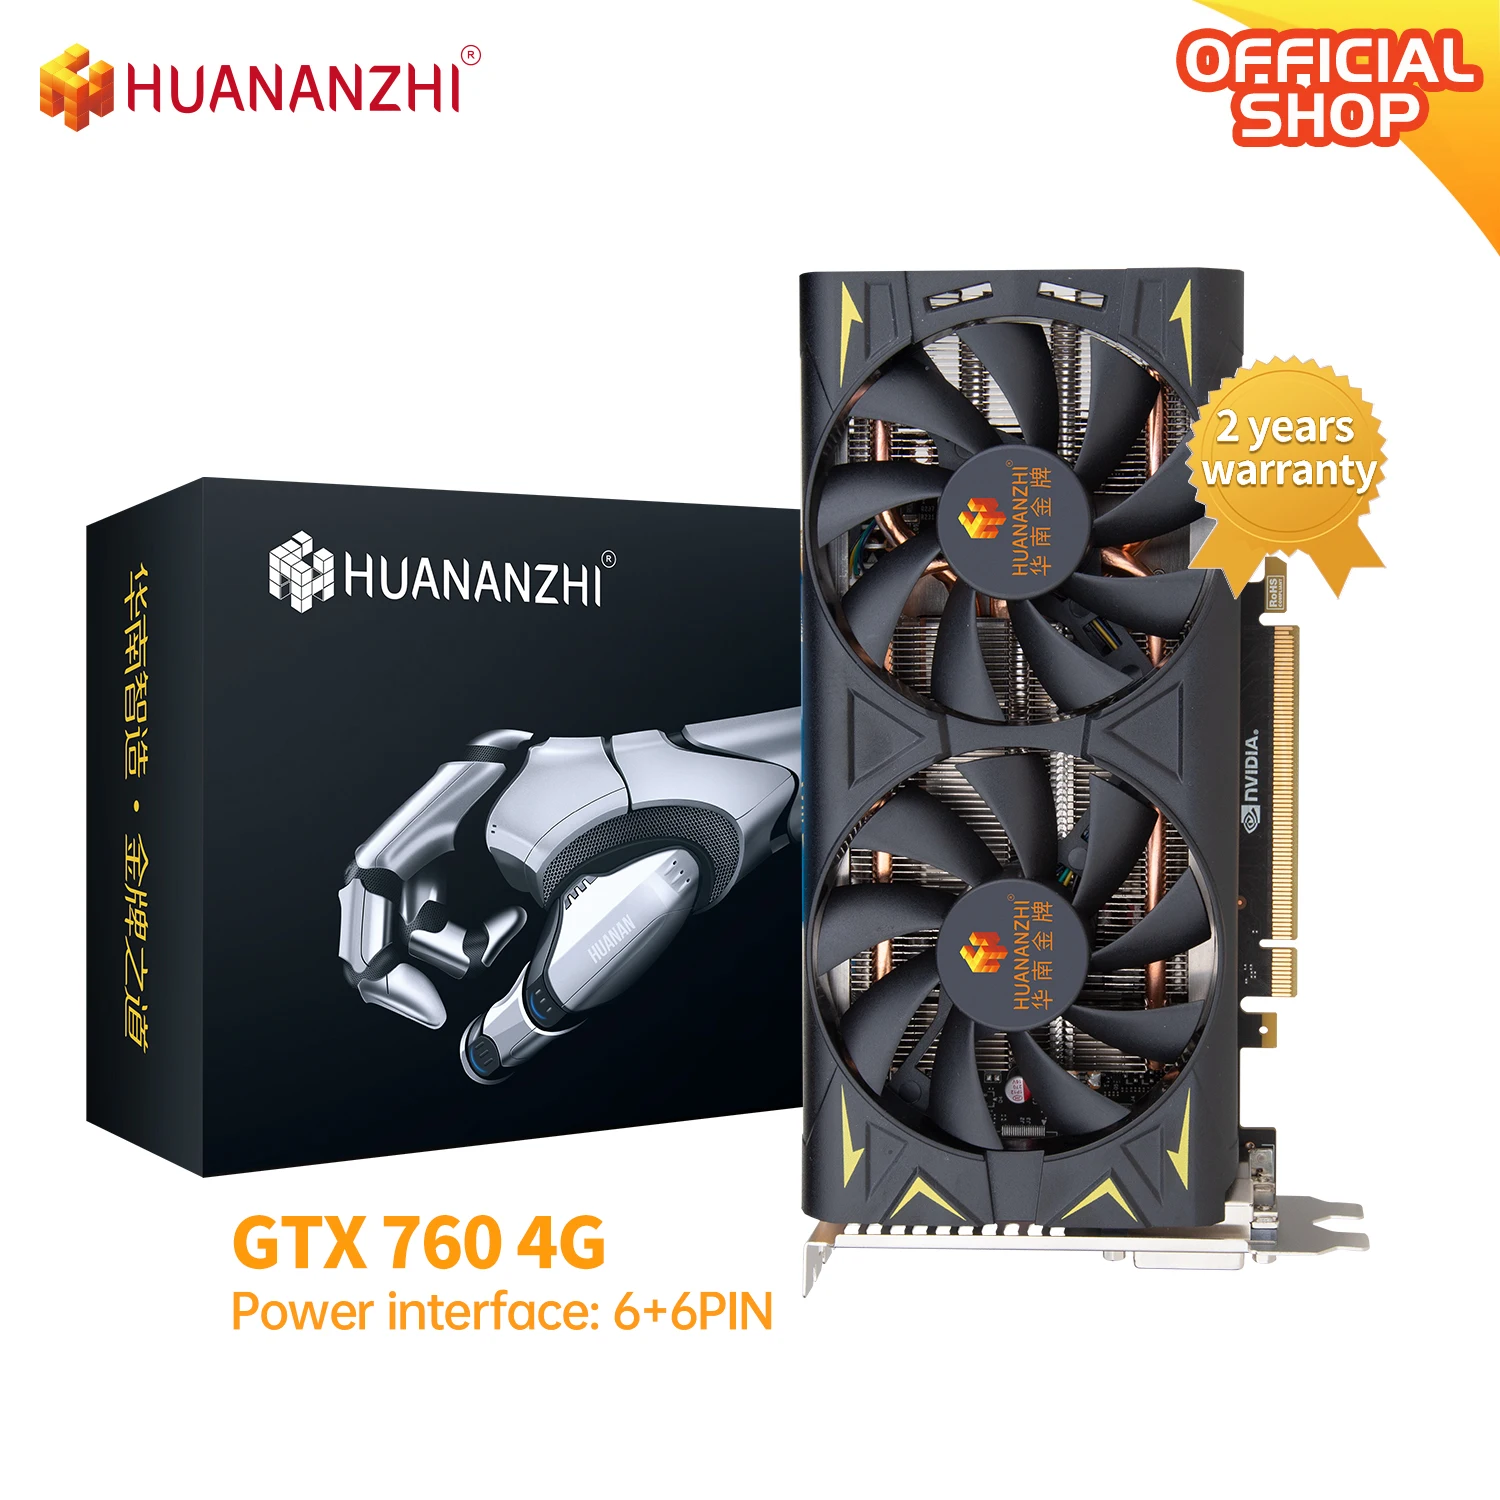 HUANANZHI GTX 1660S 650 760 960 970 1060 2G 4G 6G RTX 2060 Super 6G 8G Graphics Card RX 550 560 4G VGA HDMI-Compatibl Video Card latest graphics card for pc Graphics Cards